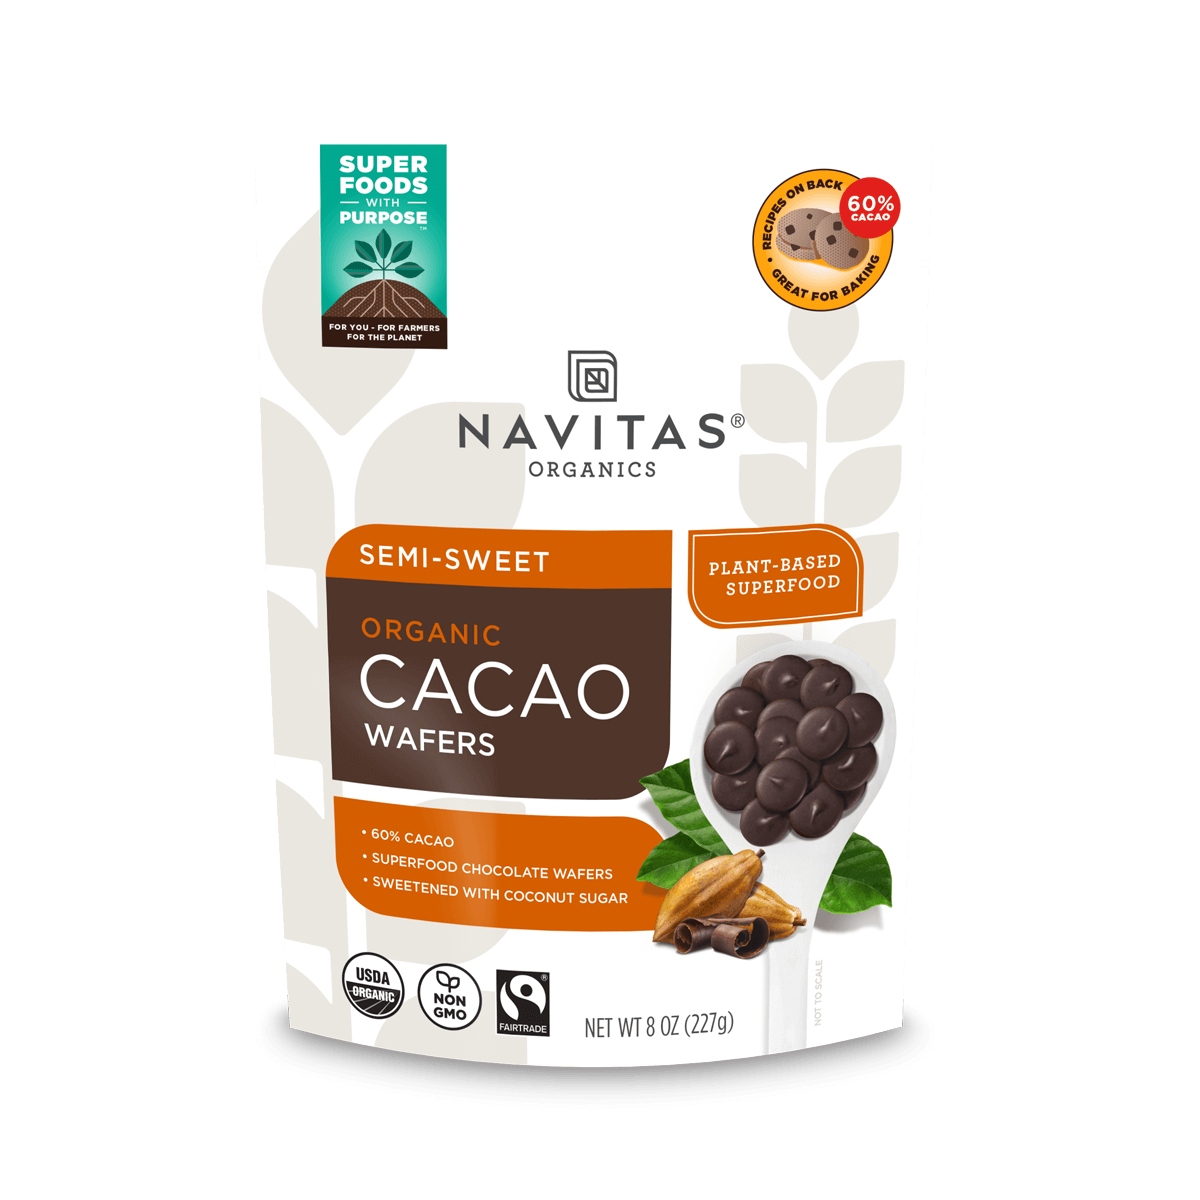 Navitas Organics 8oz Semi-sweet Cacao Wafers front of bag